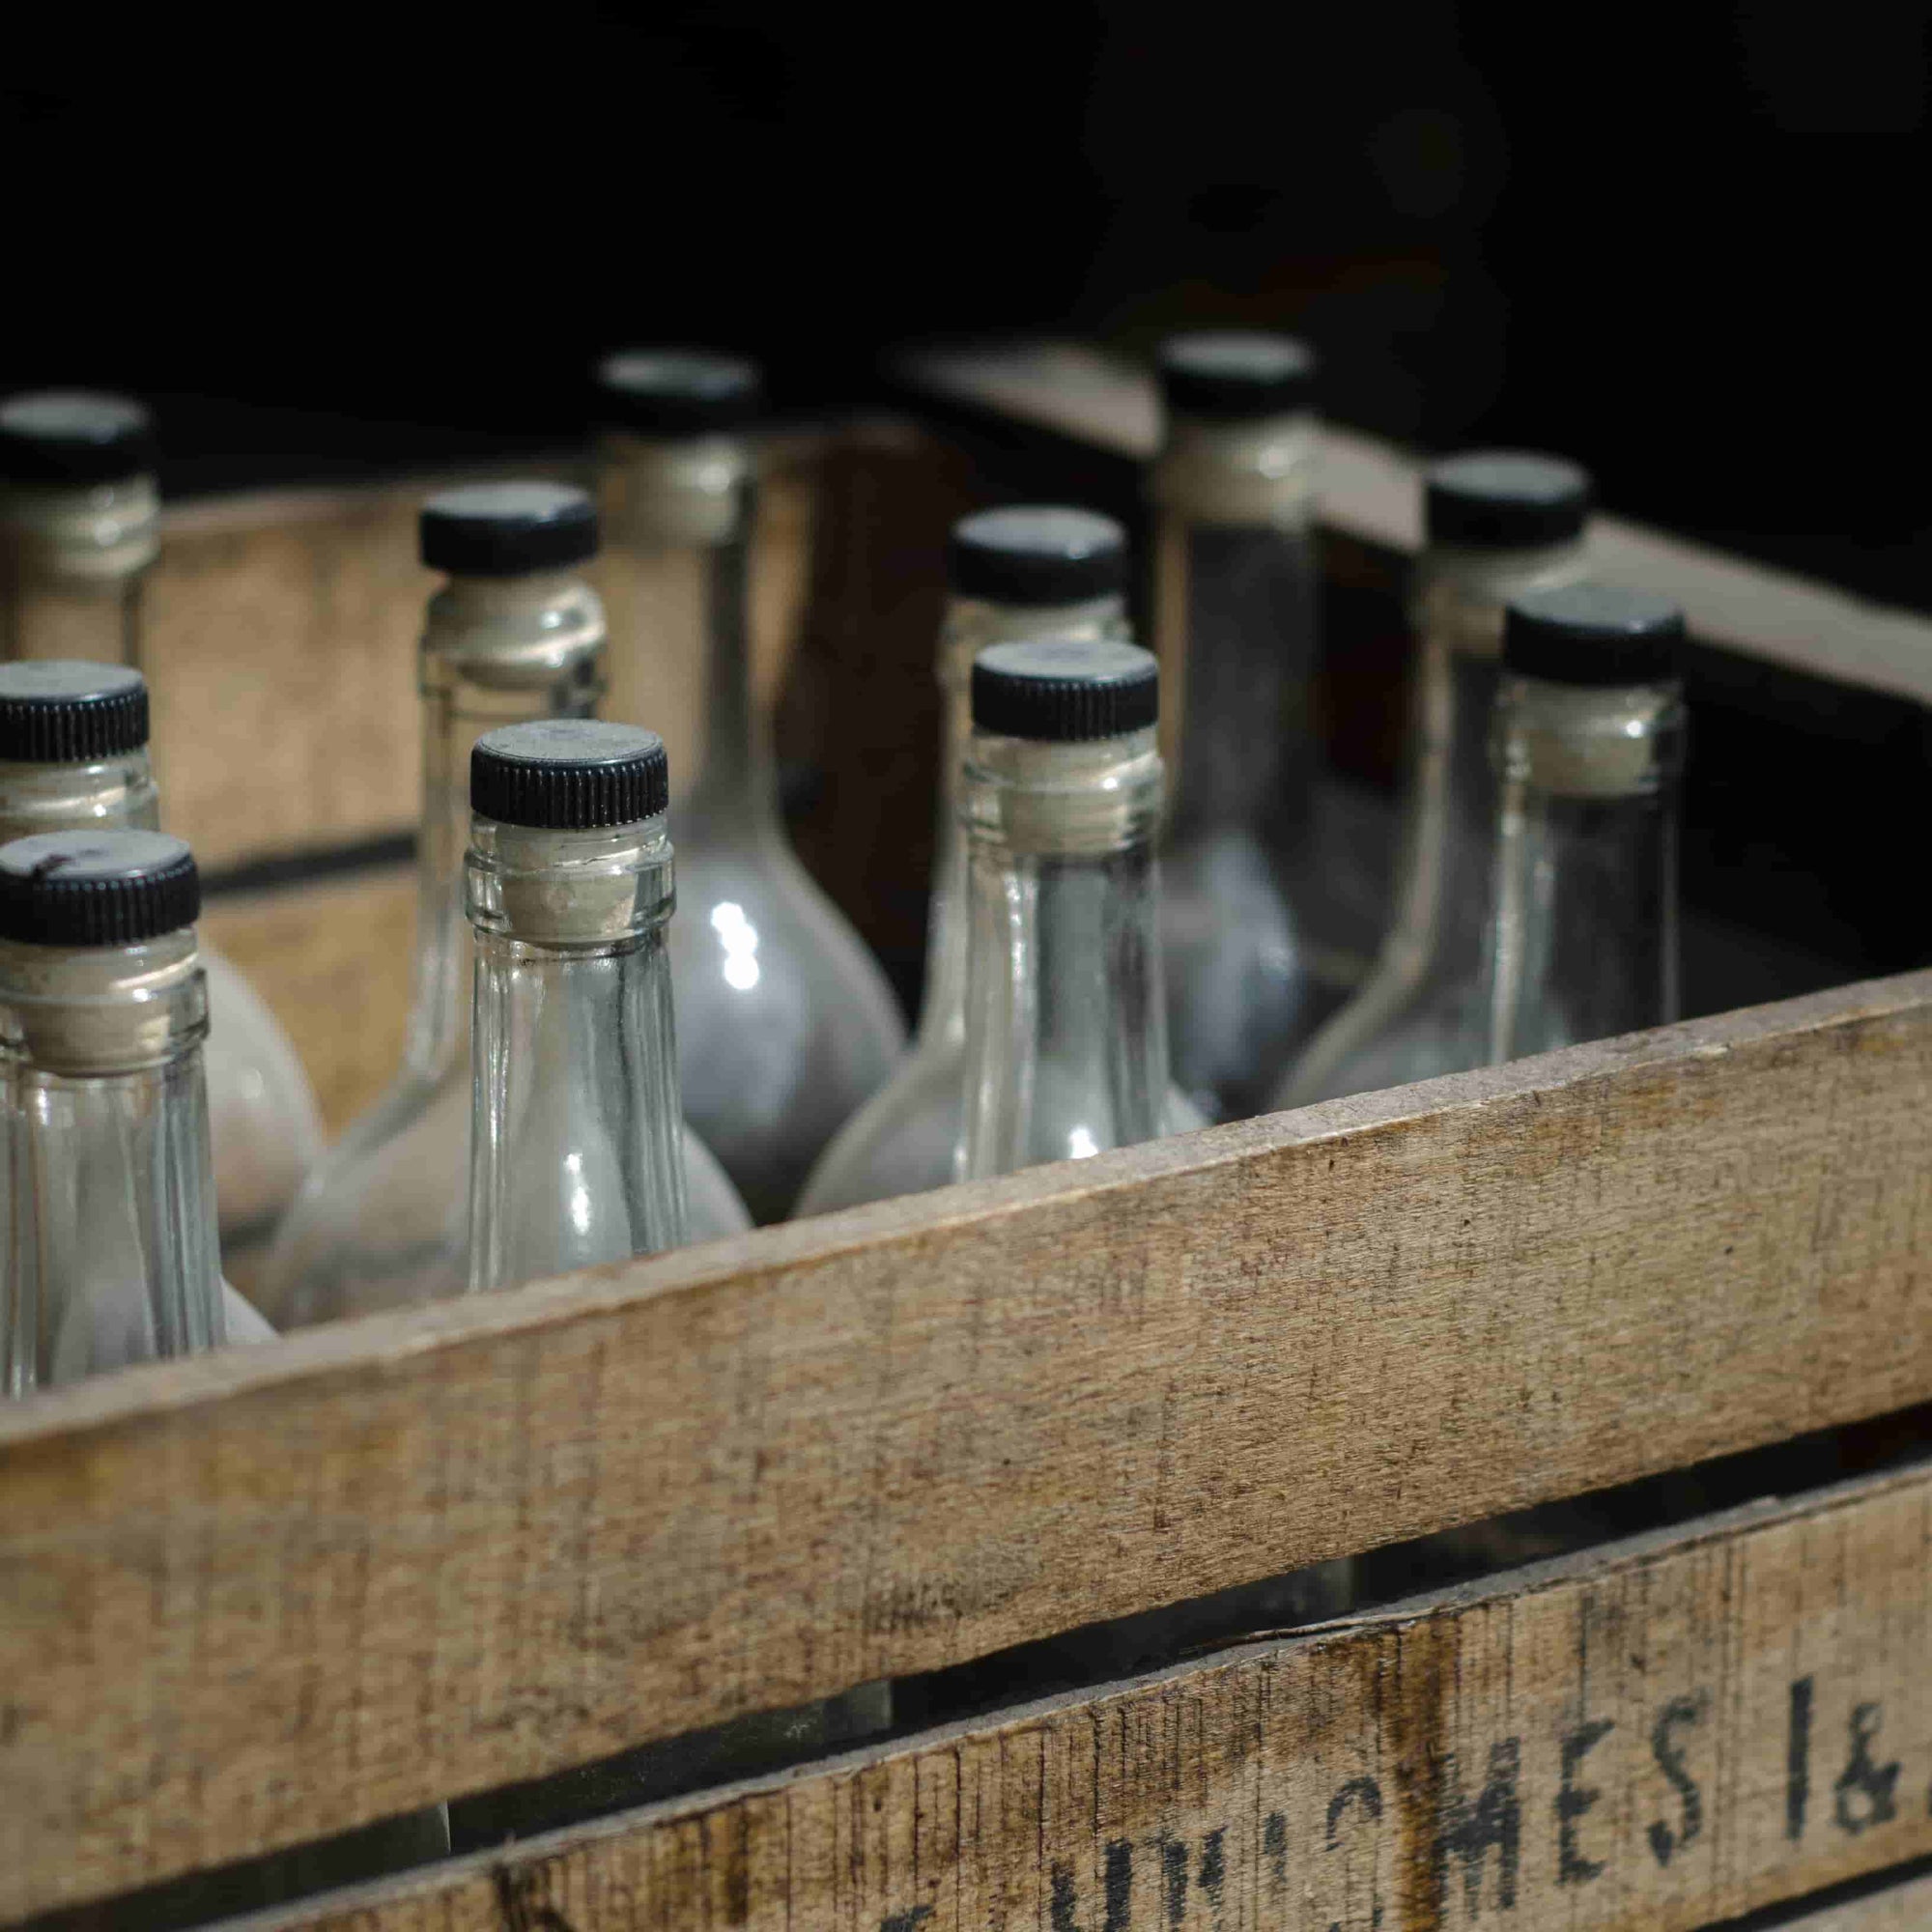 Spirit-distilling-bottles-supplies-beginner-kit